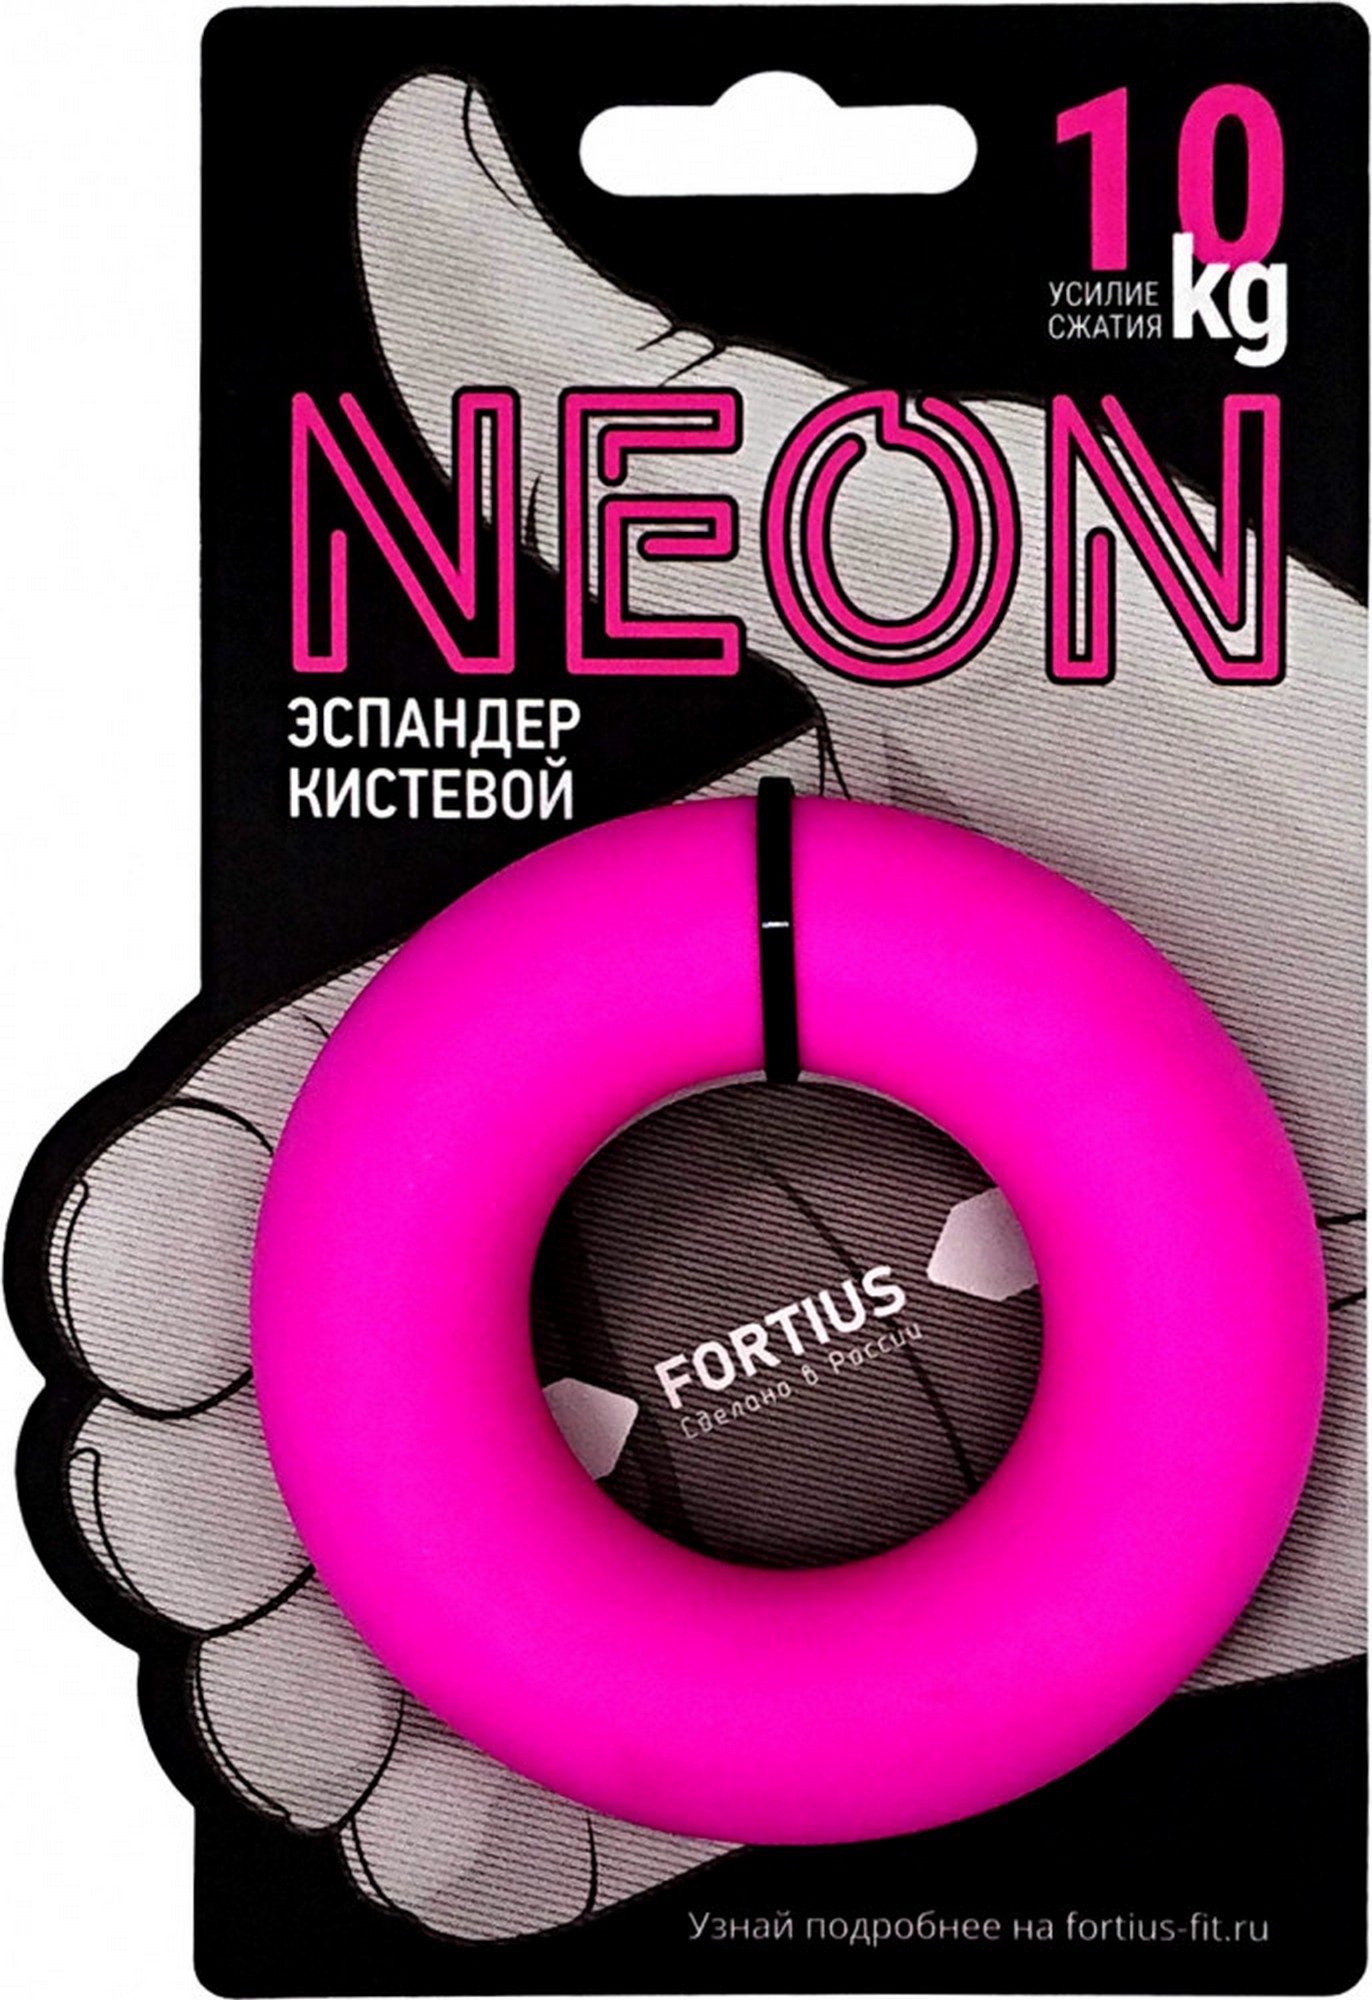 Эспандер кистевой Fortius Neon 10 кг H180701-10FP розовый 1372_2000